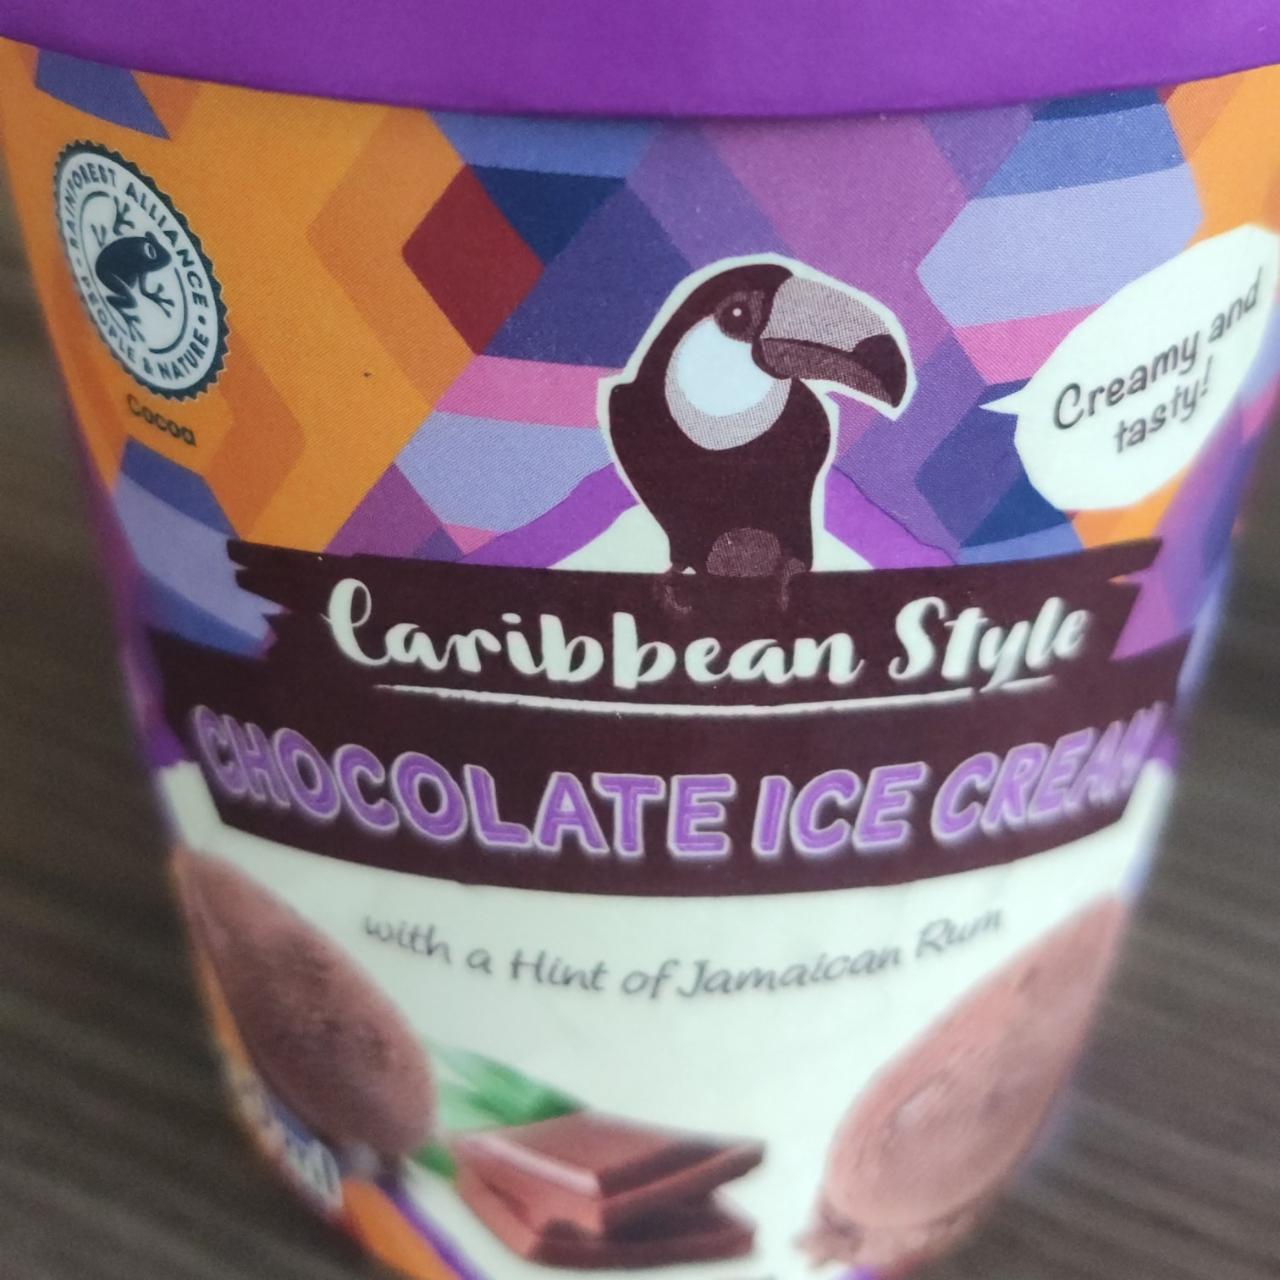 Fotografie - Chocolate Ice Cream Caribbean style